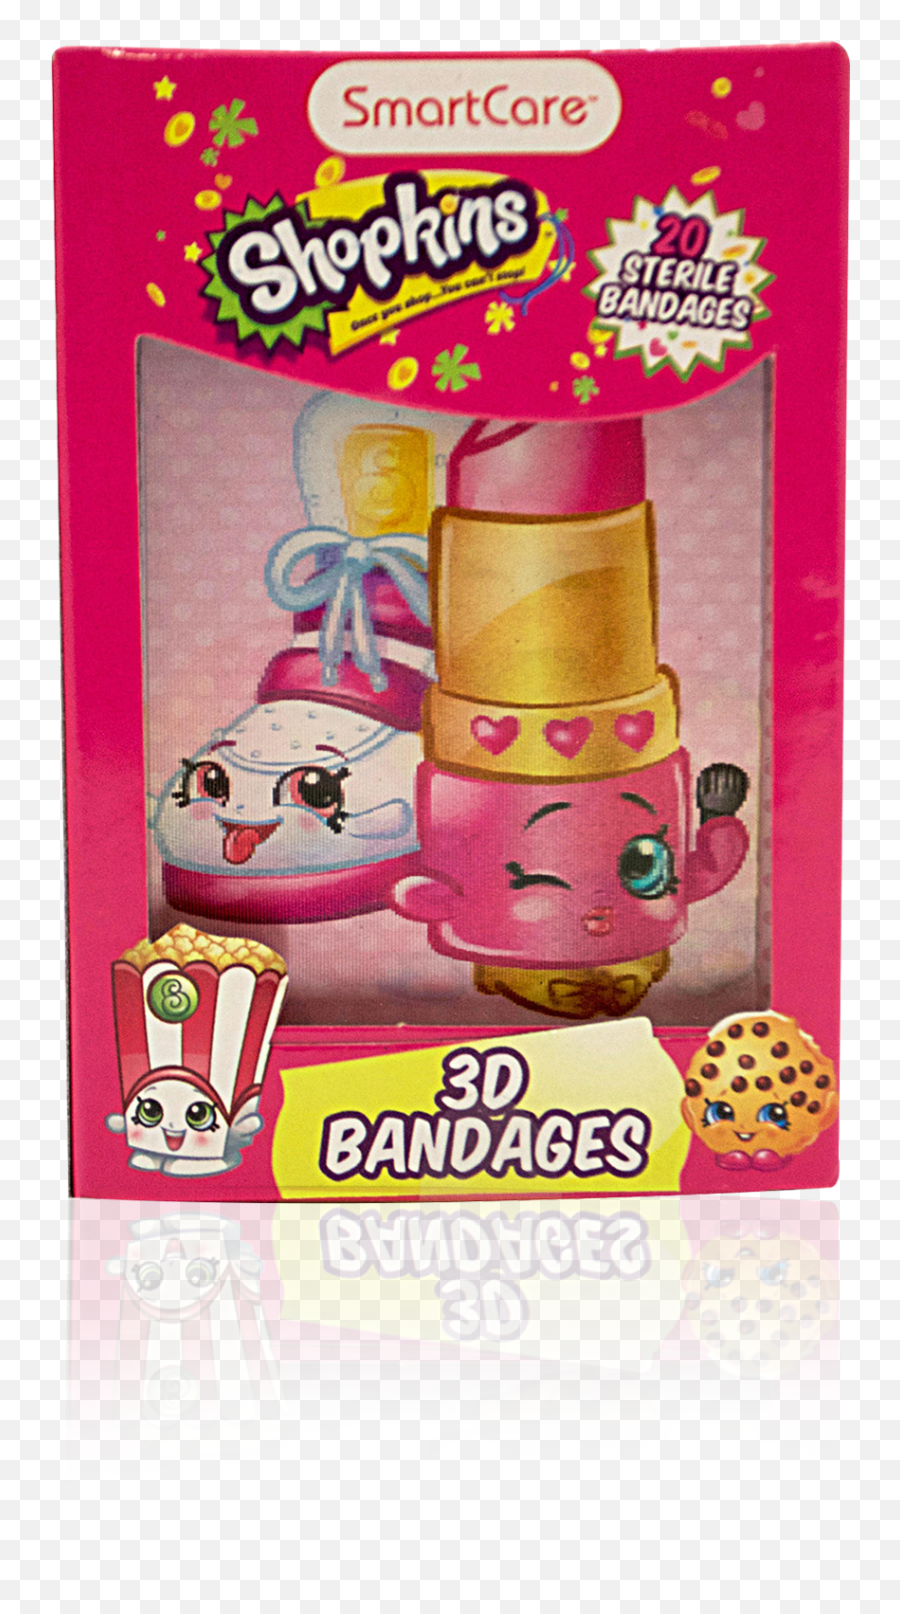 Smart Care Shopkins 3d Bandages 20 Count U2013 Brush Buddies - Shopkin Emoji,Shopkins Emoji